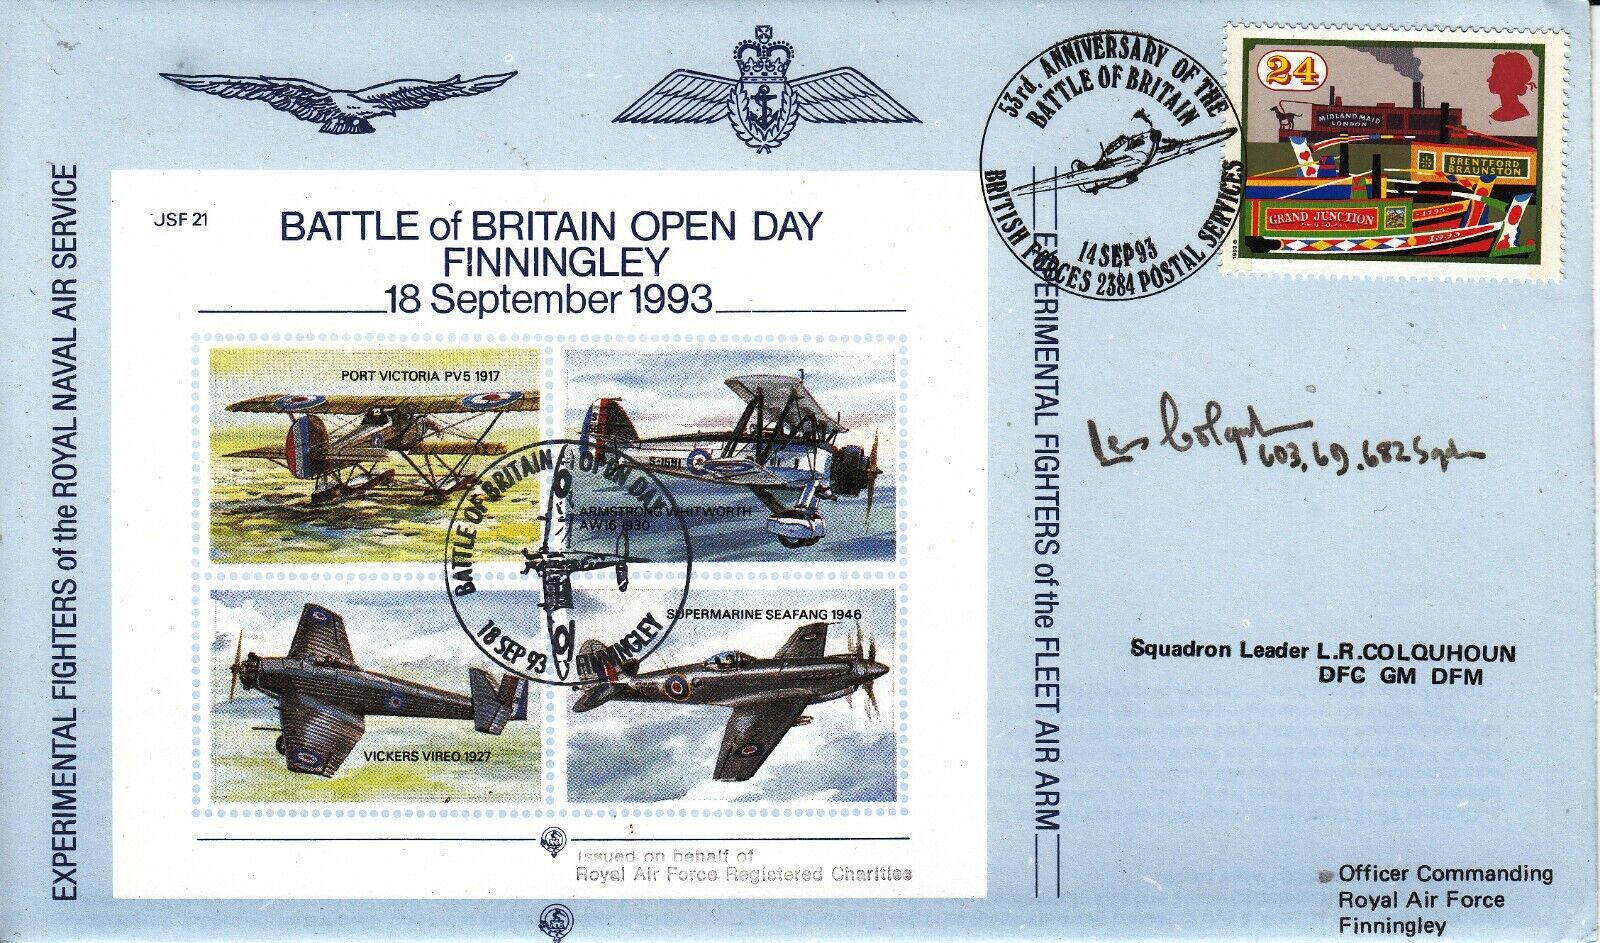 JSF21 Battle of Britain RAF Cover signed Sqn Leader Colquhoun DFC GM DFM